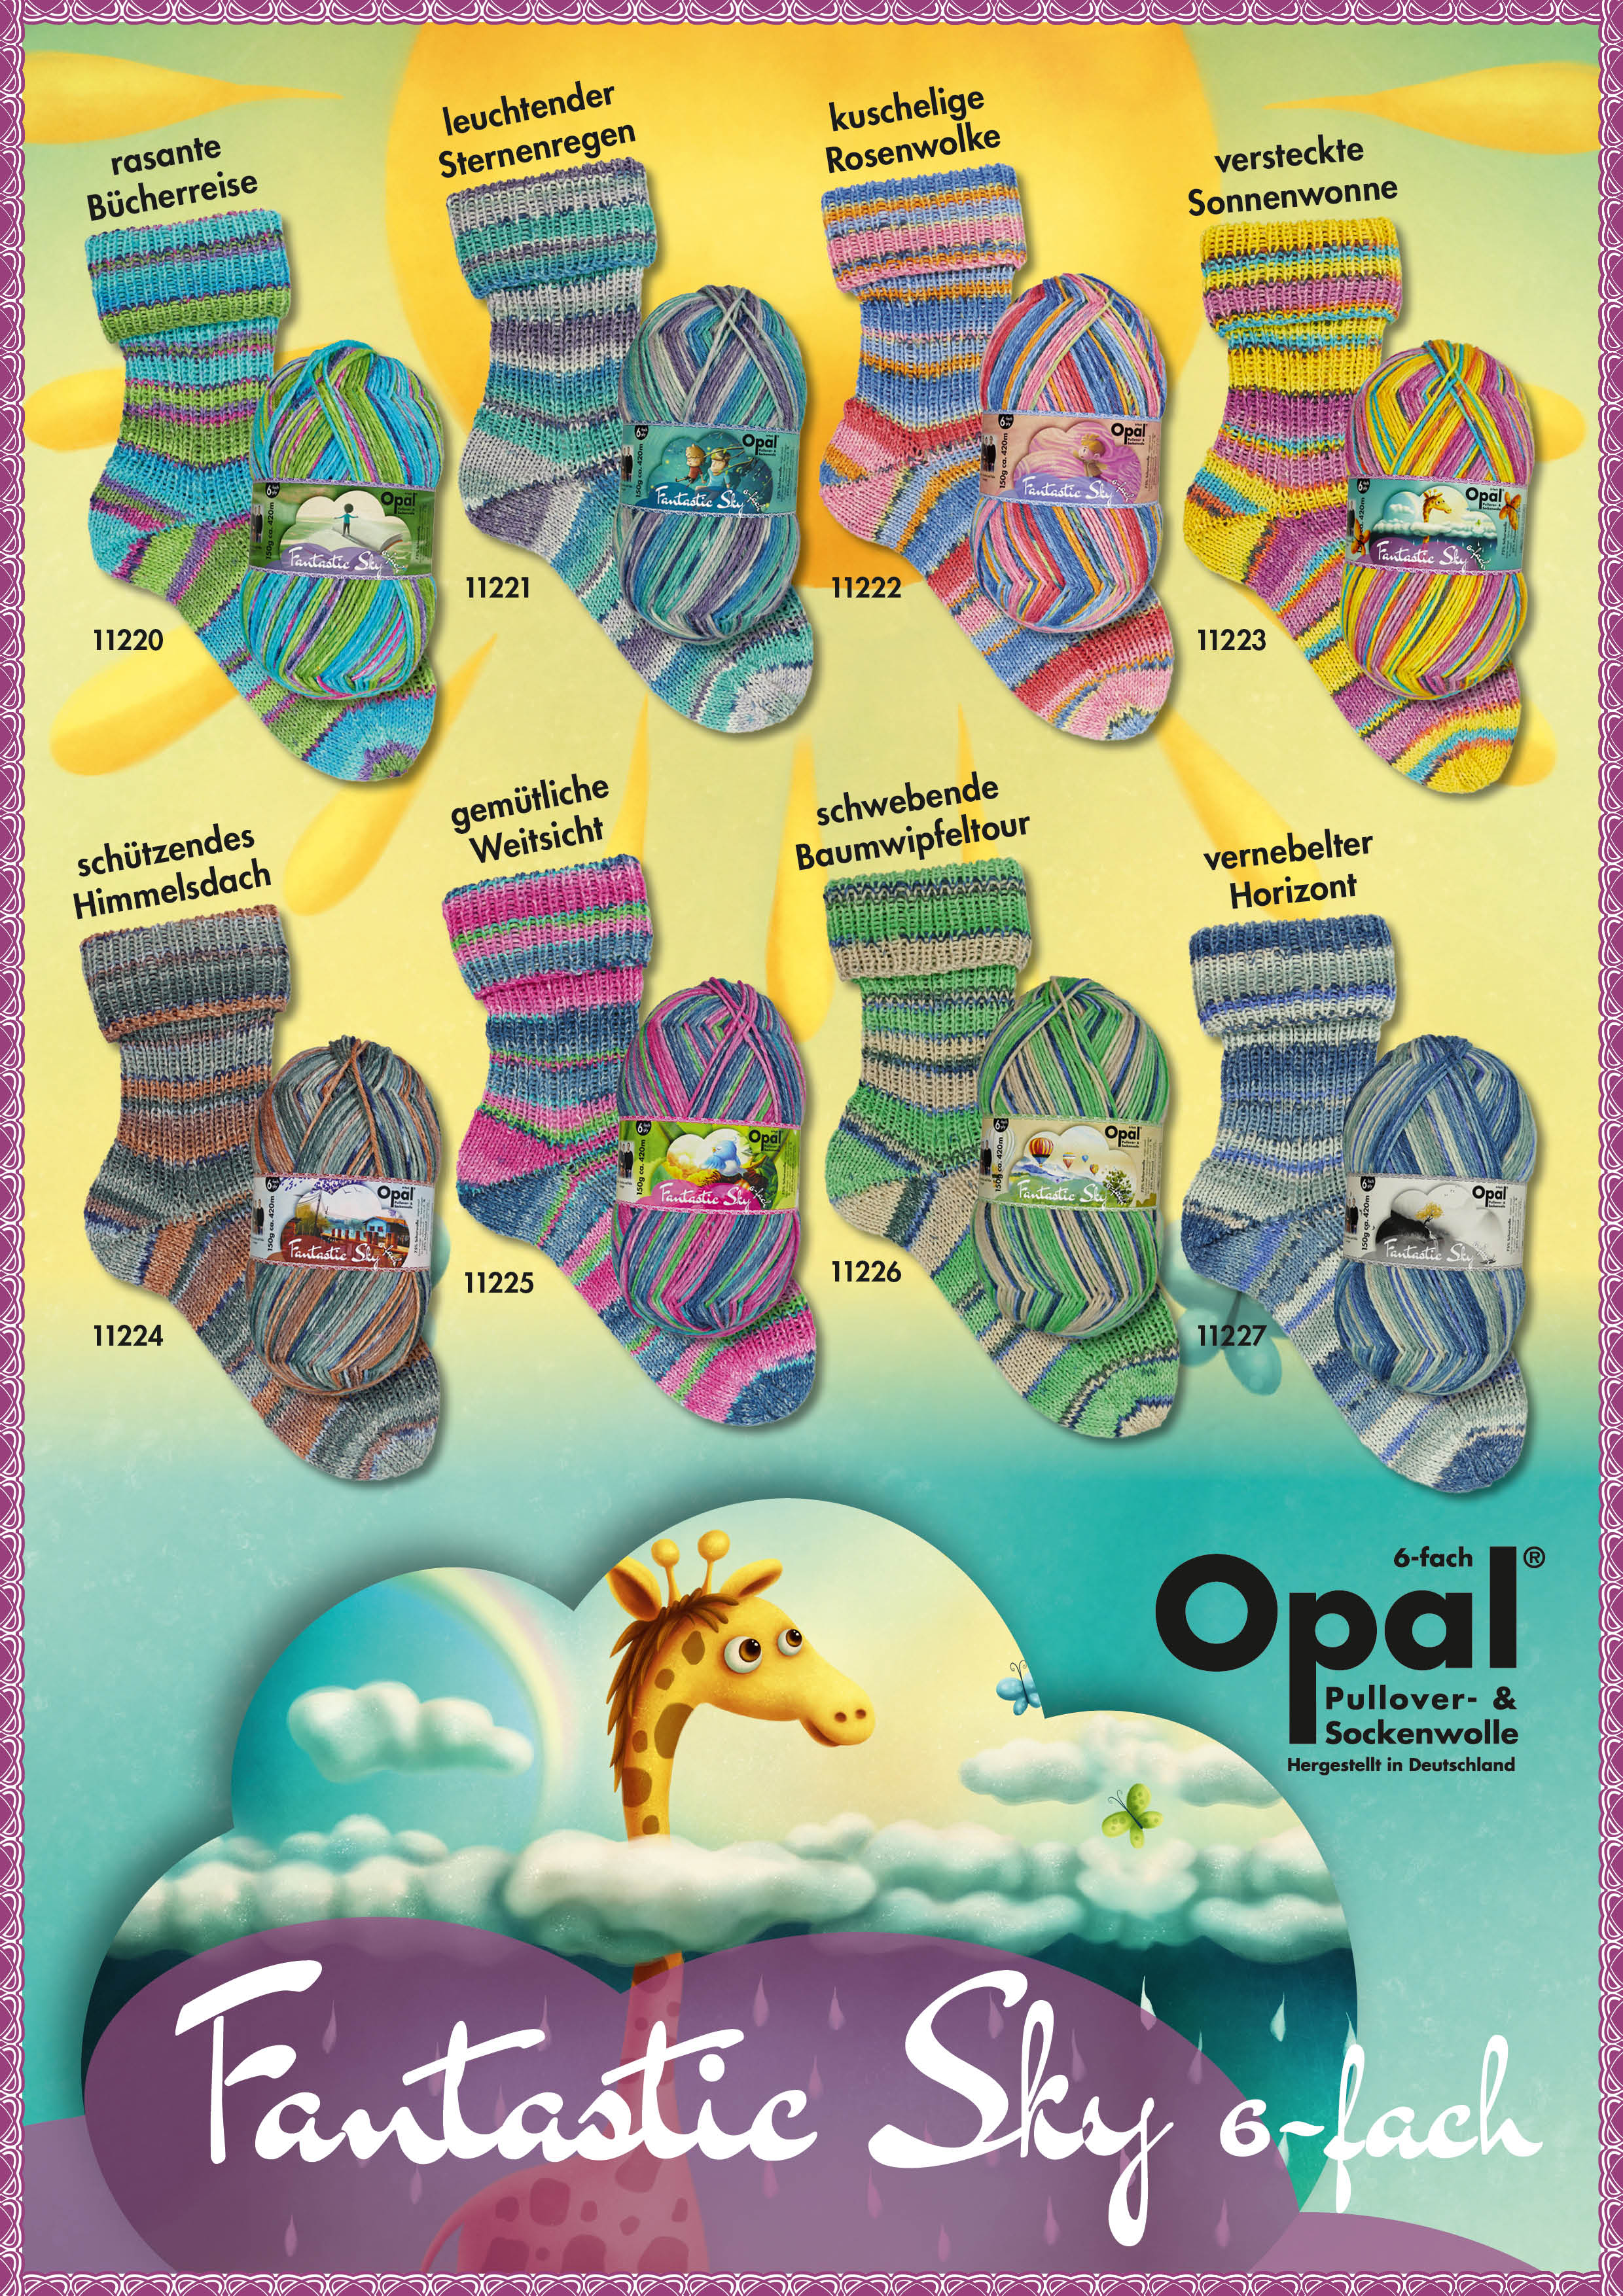 OPAL Color - 6-fach Sockenwolle Fantastic Sky: 11226 schwebende Baumwipfeltour